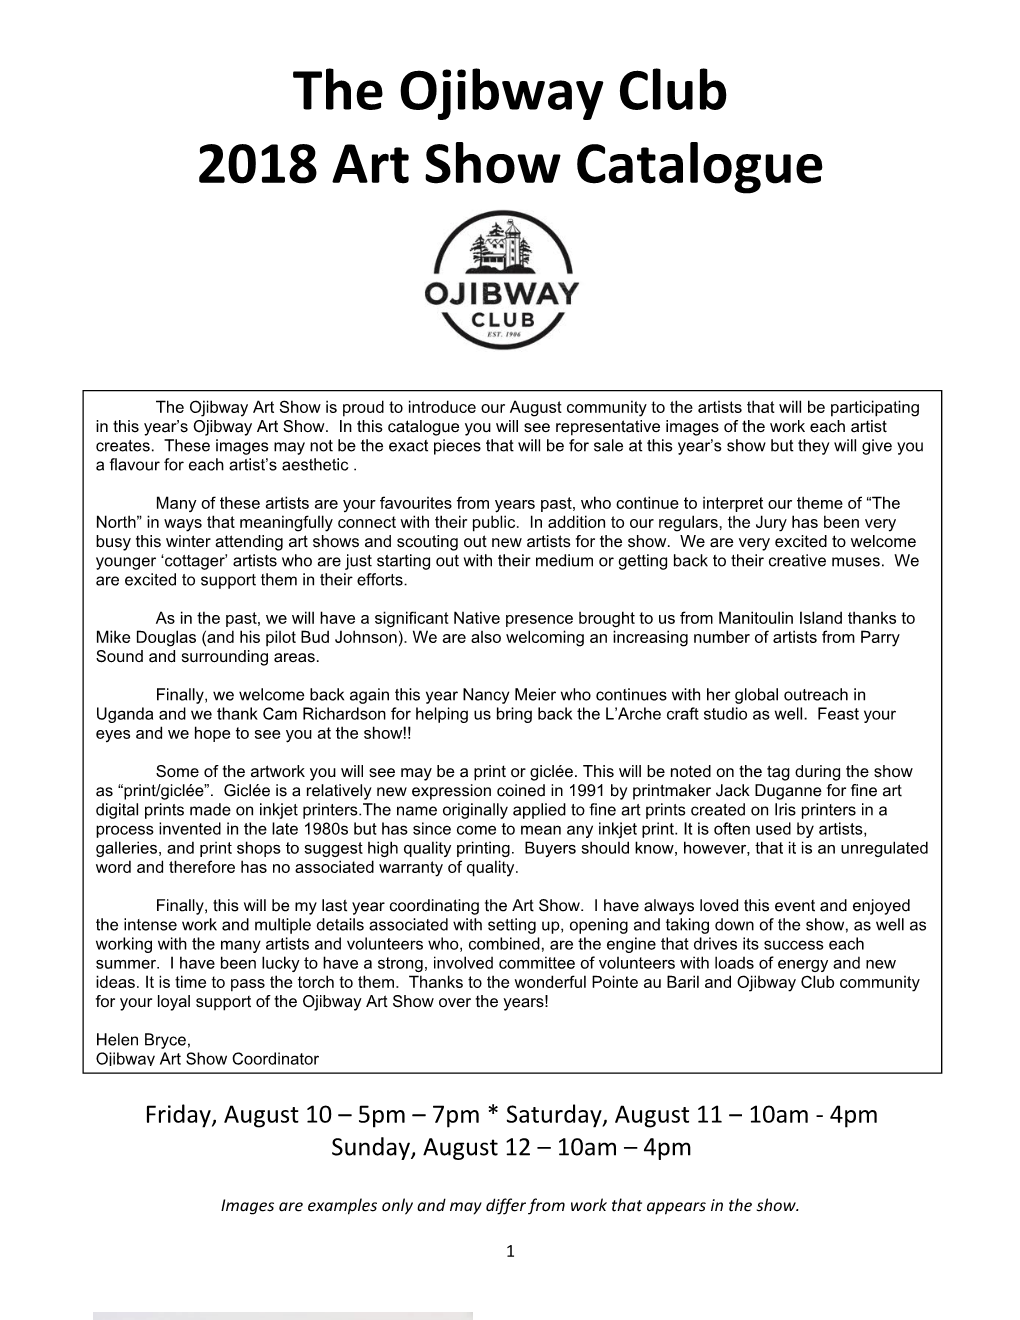 The Ojibway Club 2018 Art Show Catalogue